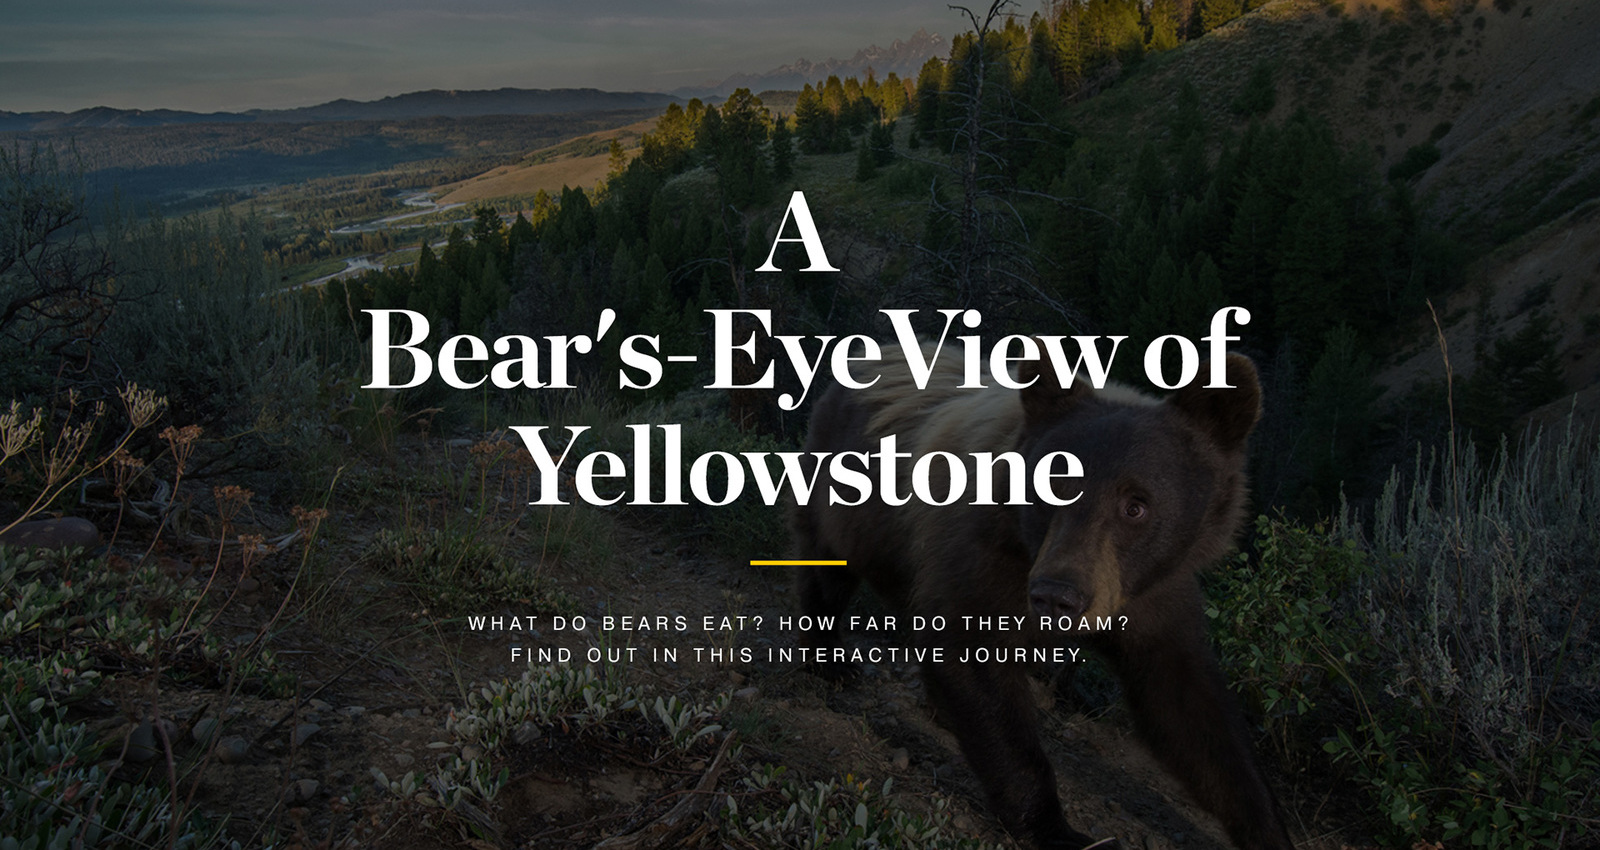 A Bear's-Eye View of Yellowstone